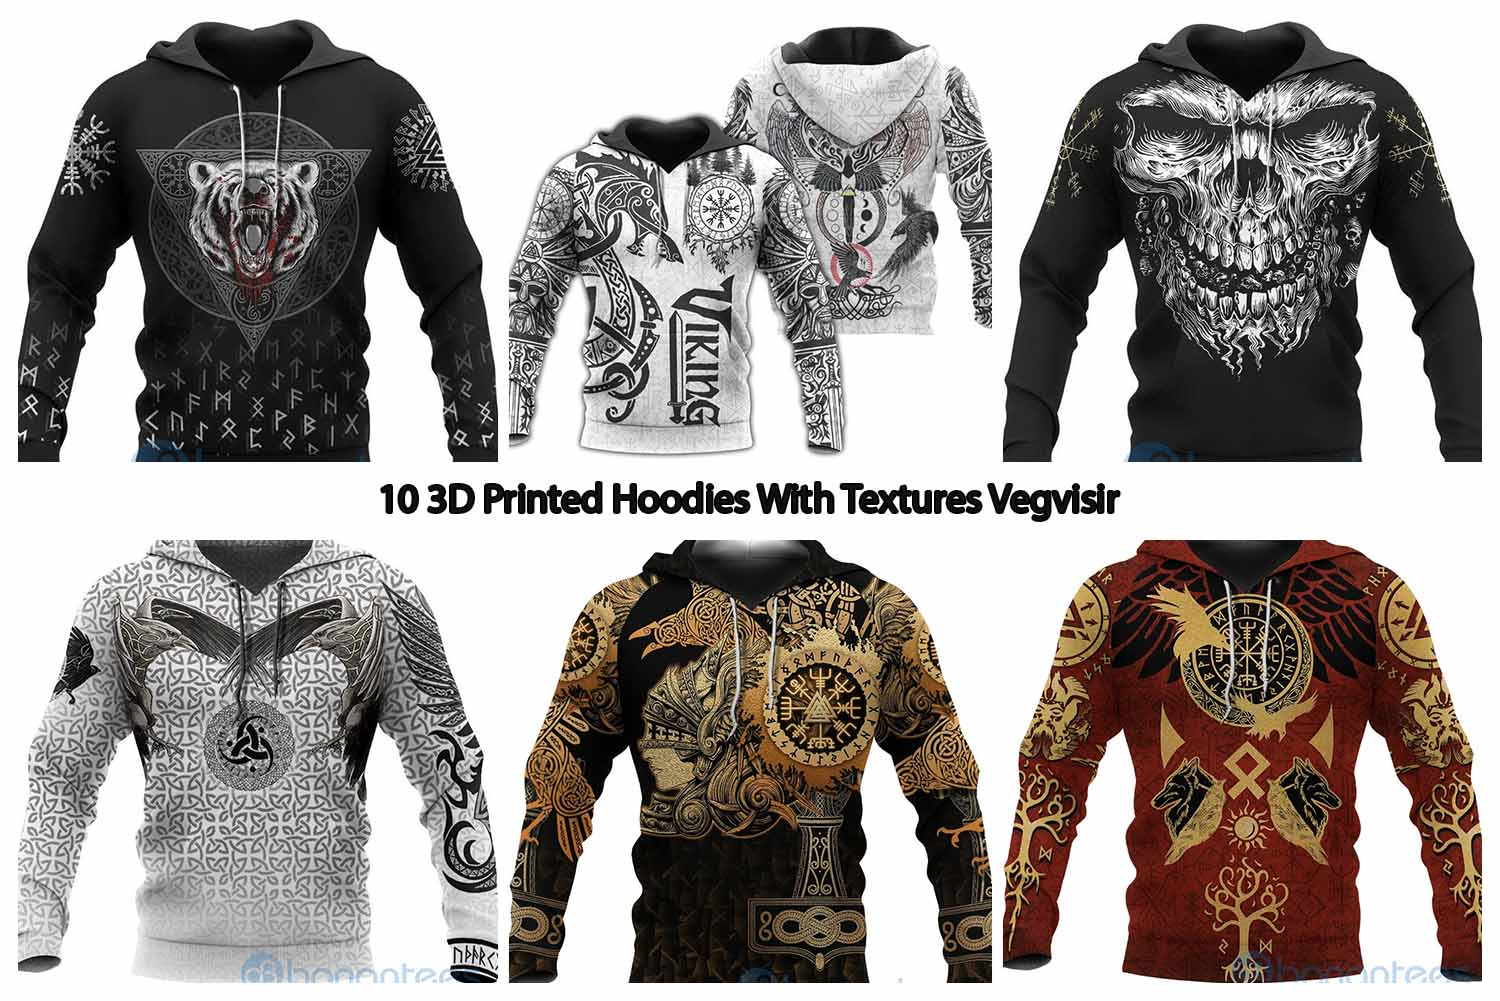 10 3D Printed Hoodies With Textures Vegvisir